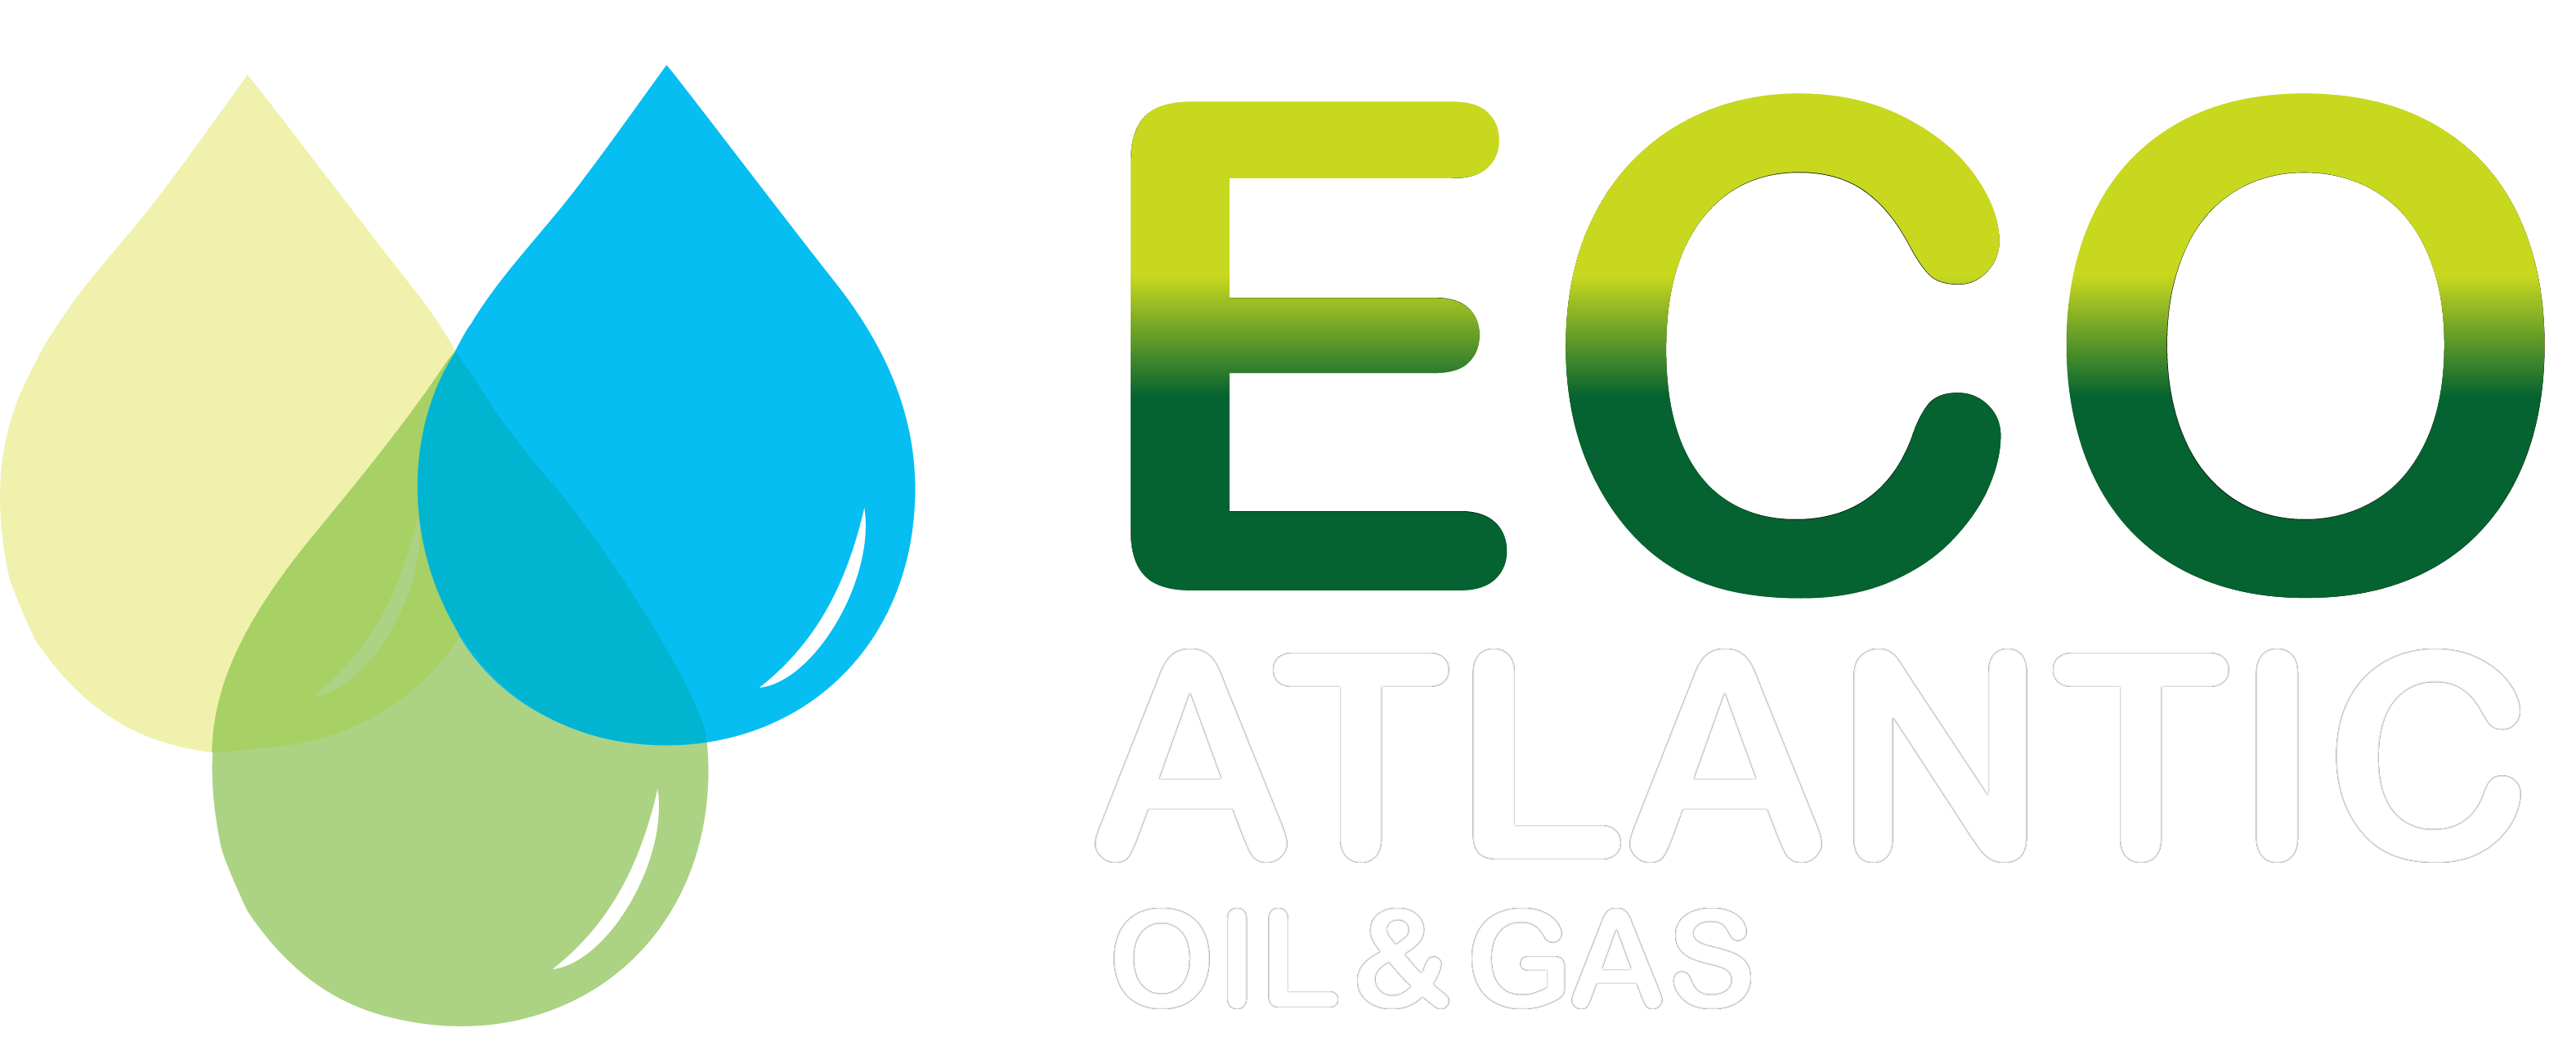 Atlantic Logo - Homepage - Eco (Atlantic) Oil & Gas Plc